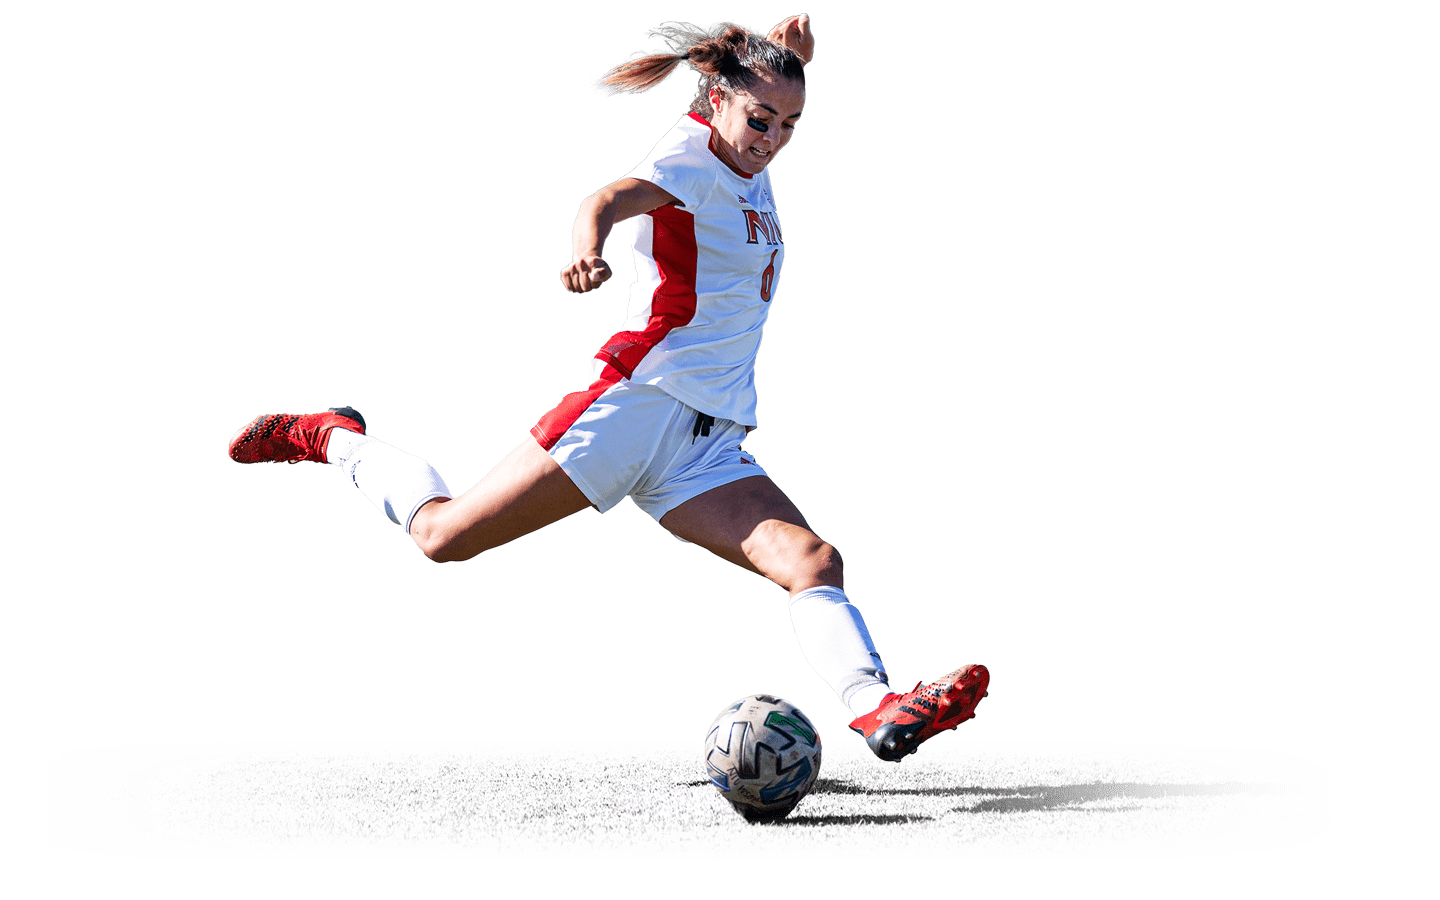 Women's soccer player kicking the ball